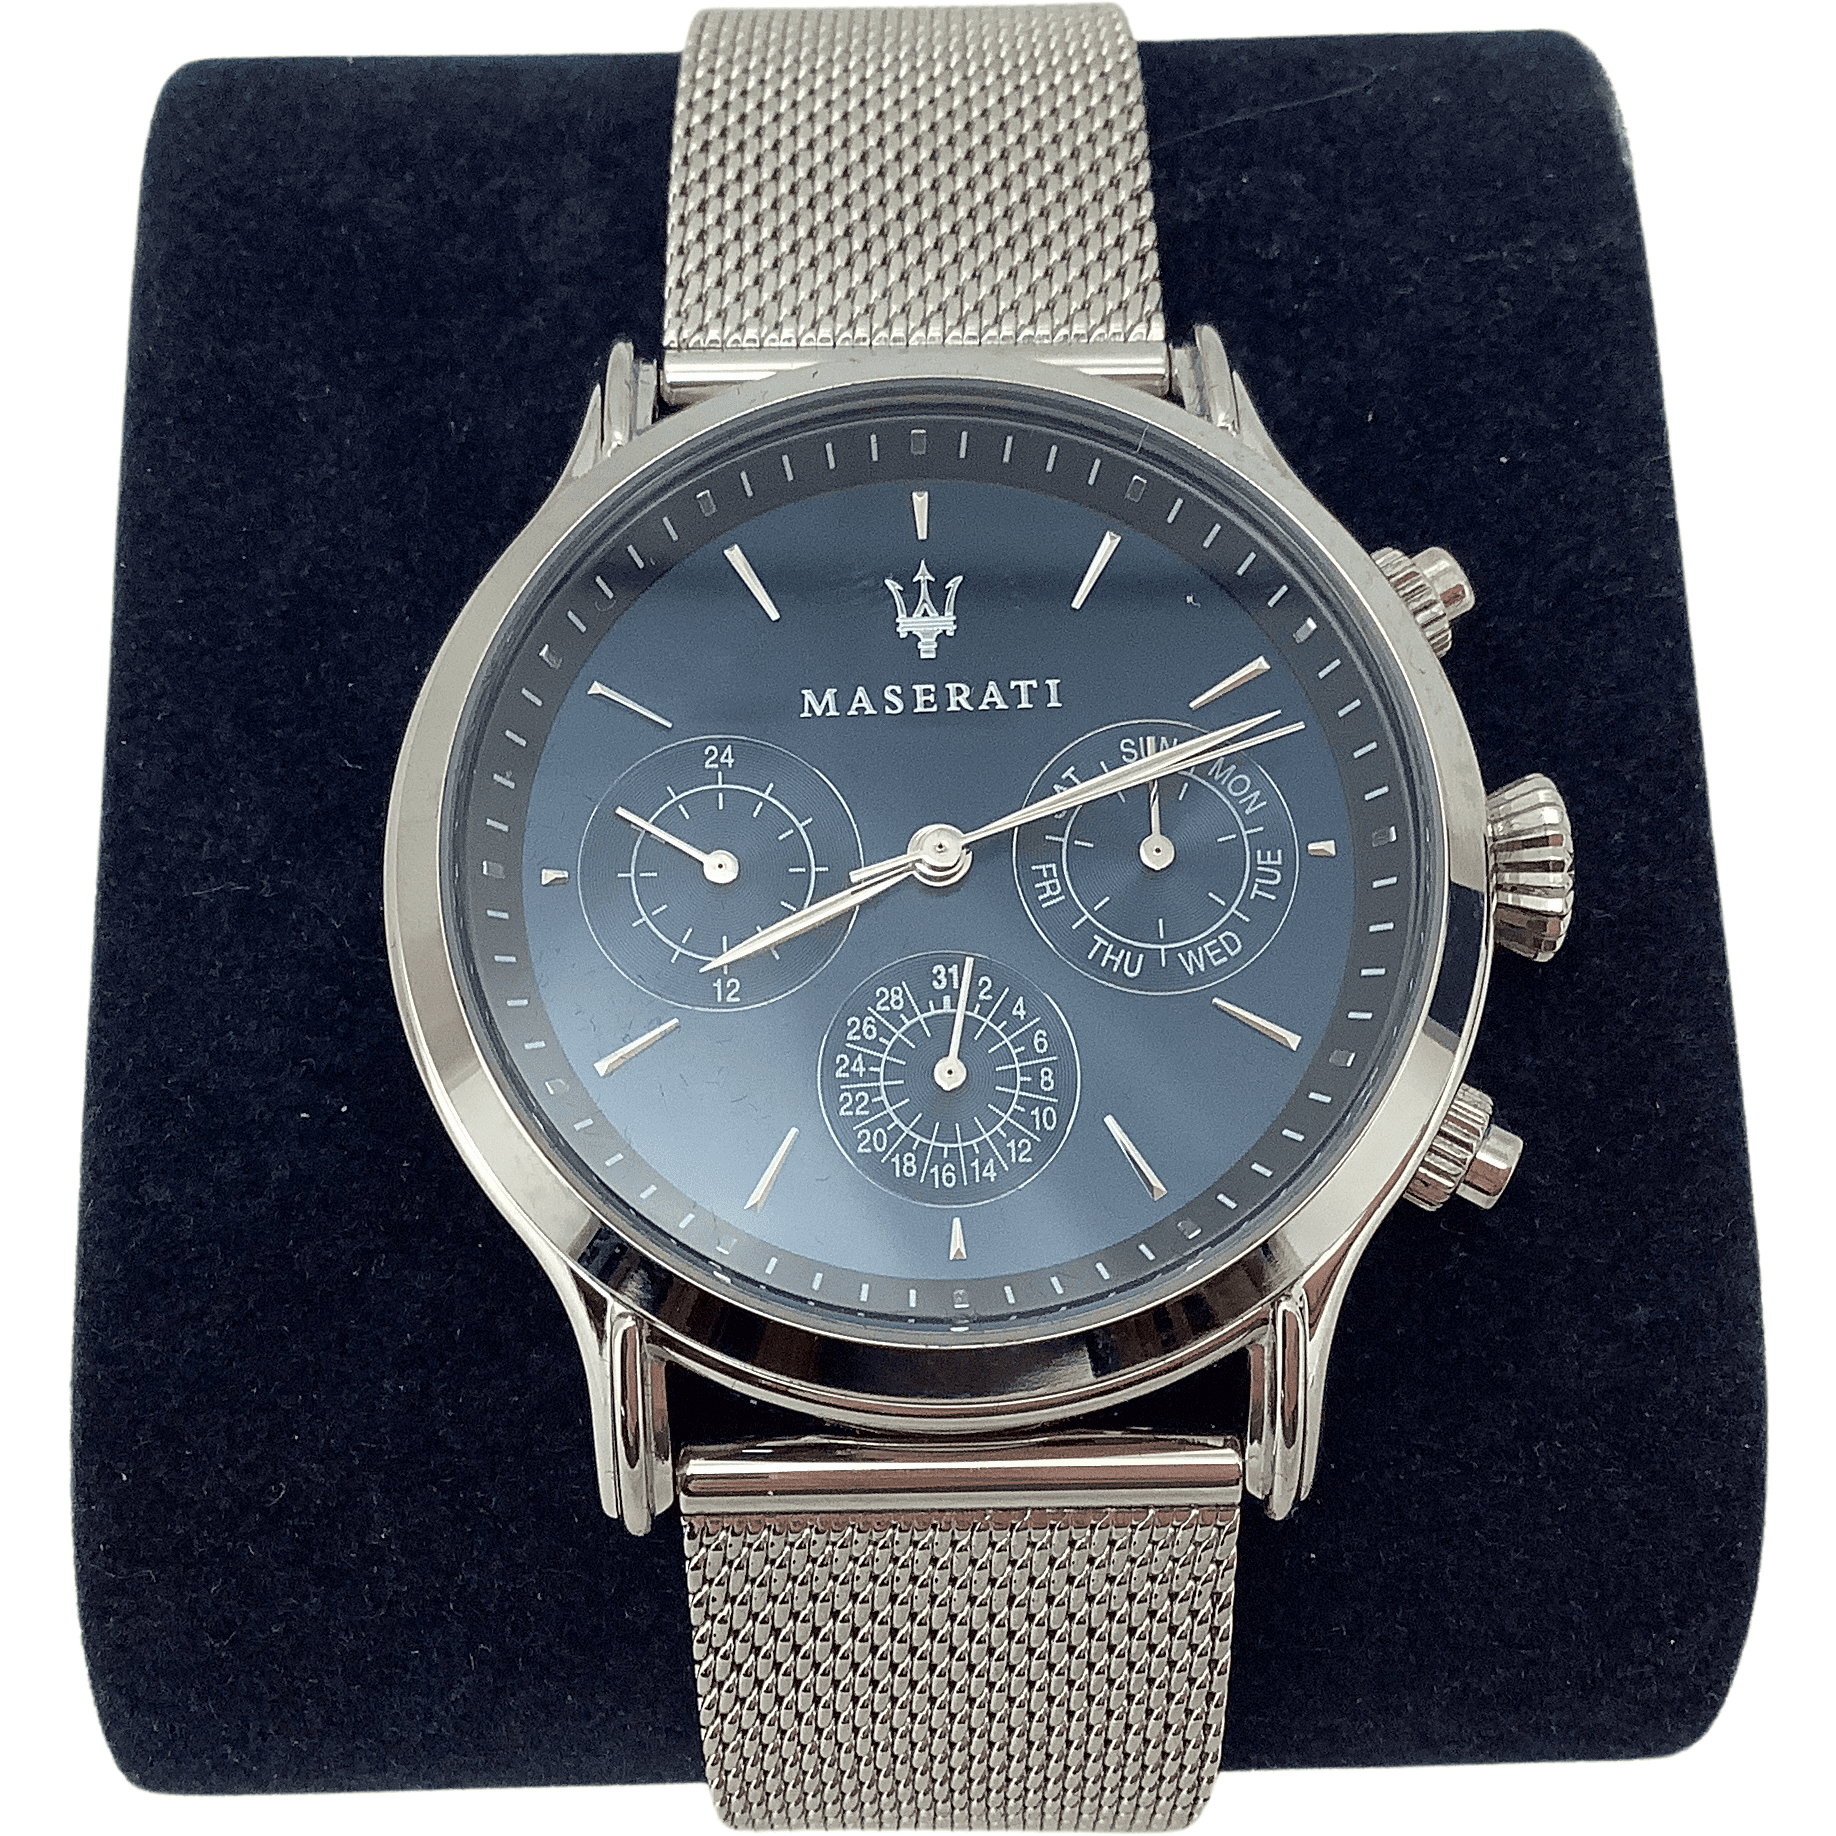 Maserati Men's Fashion Watch / Analog Wrist Watch / Stainless Steel / Men's Accessories